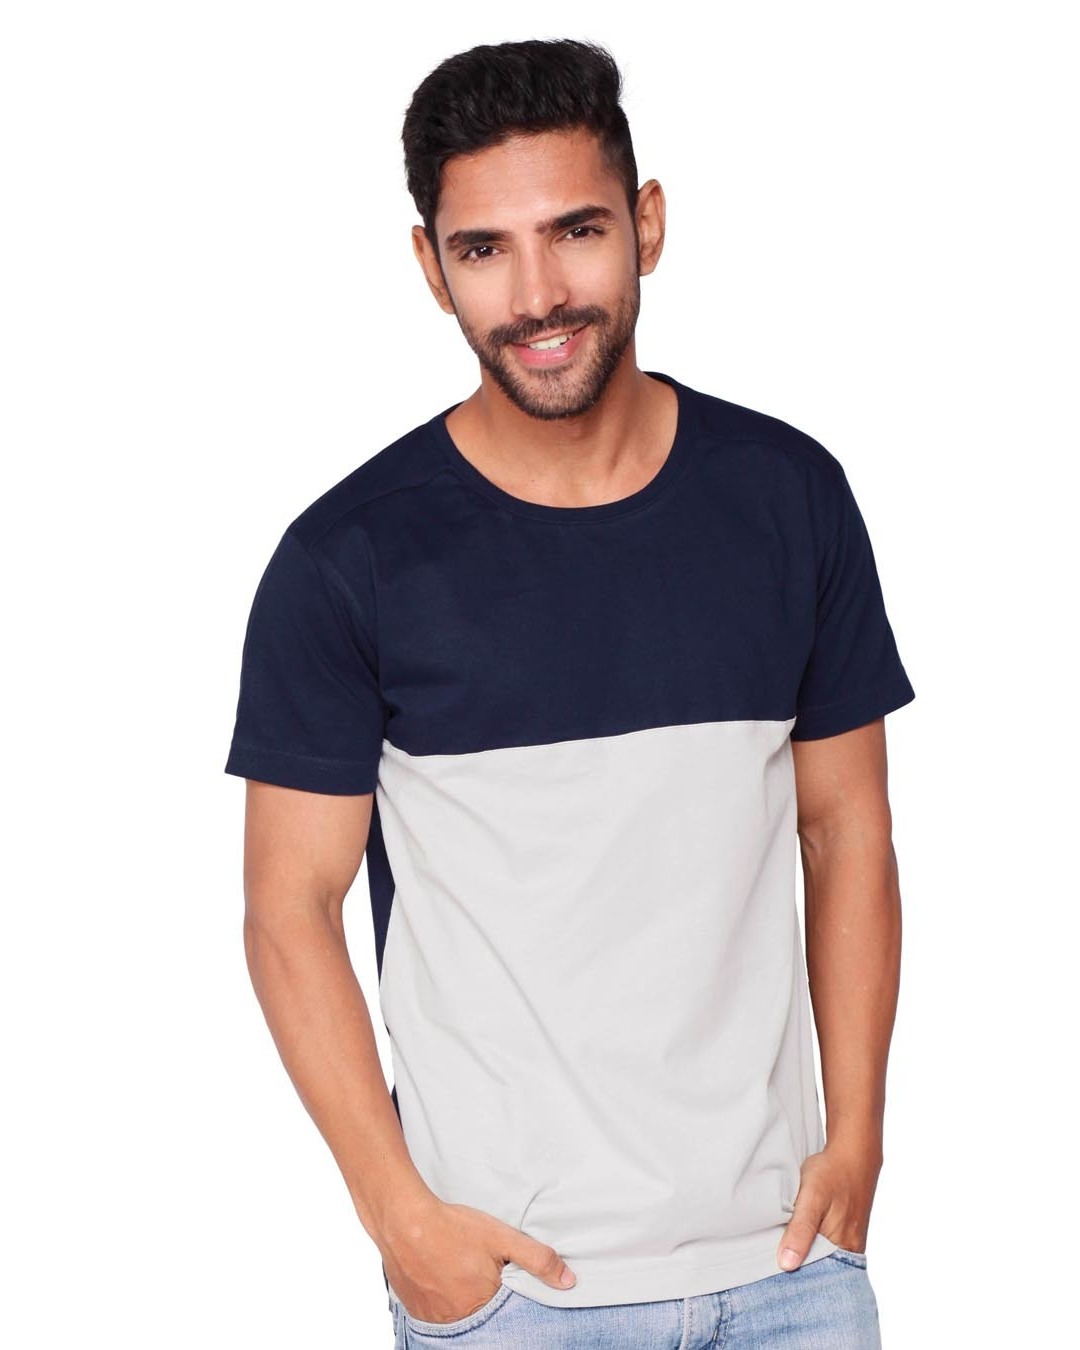 Blue/Gray Plain Panel T-Shirts for Men Online at Bewakoof.com